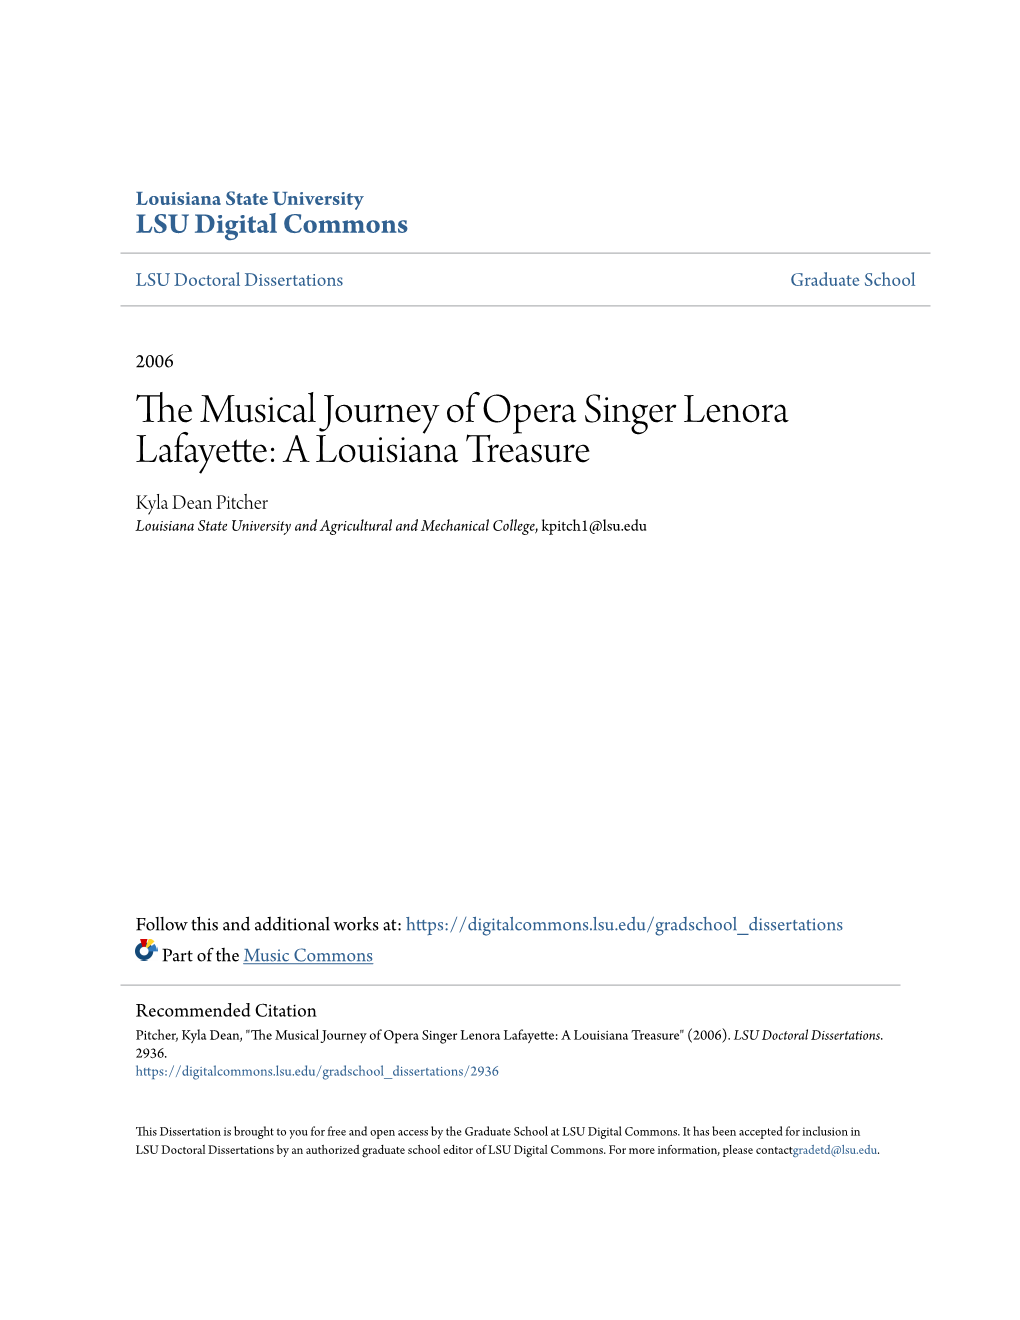 The Musical Journey of Opera Singer Lenora Lafayette: a Louisiana Treasure